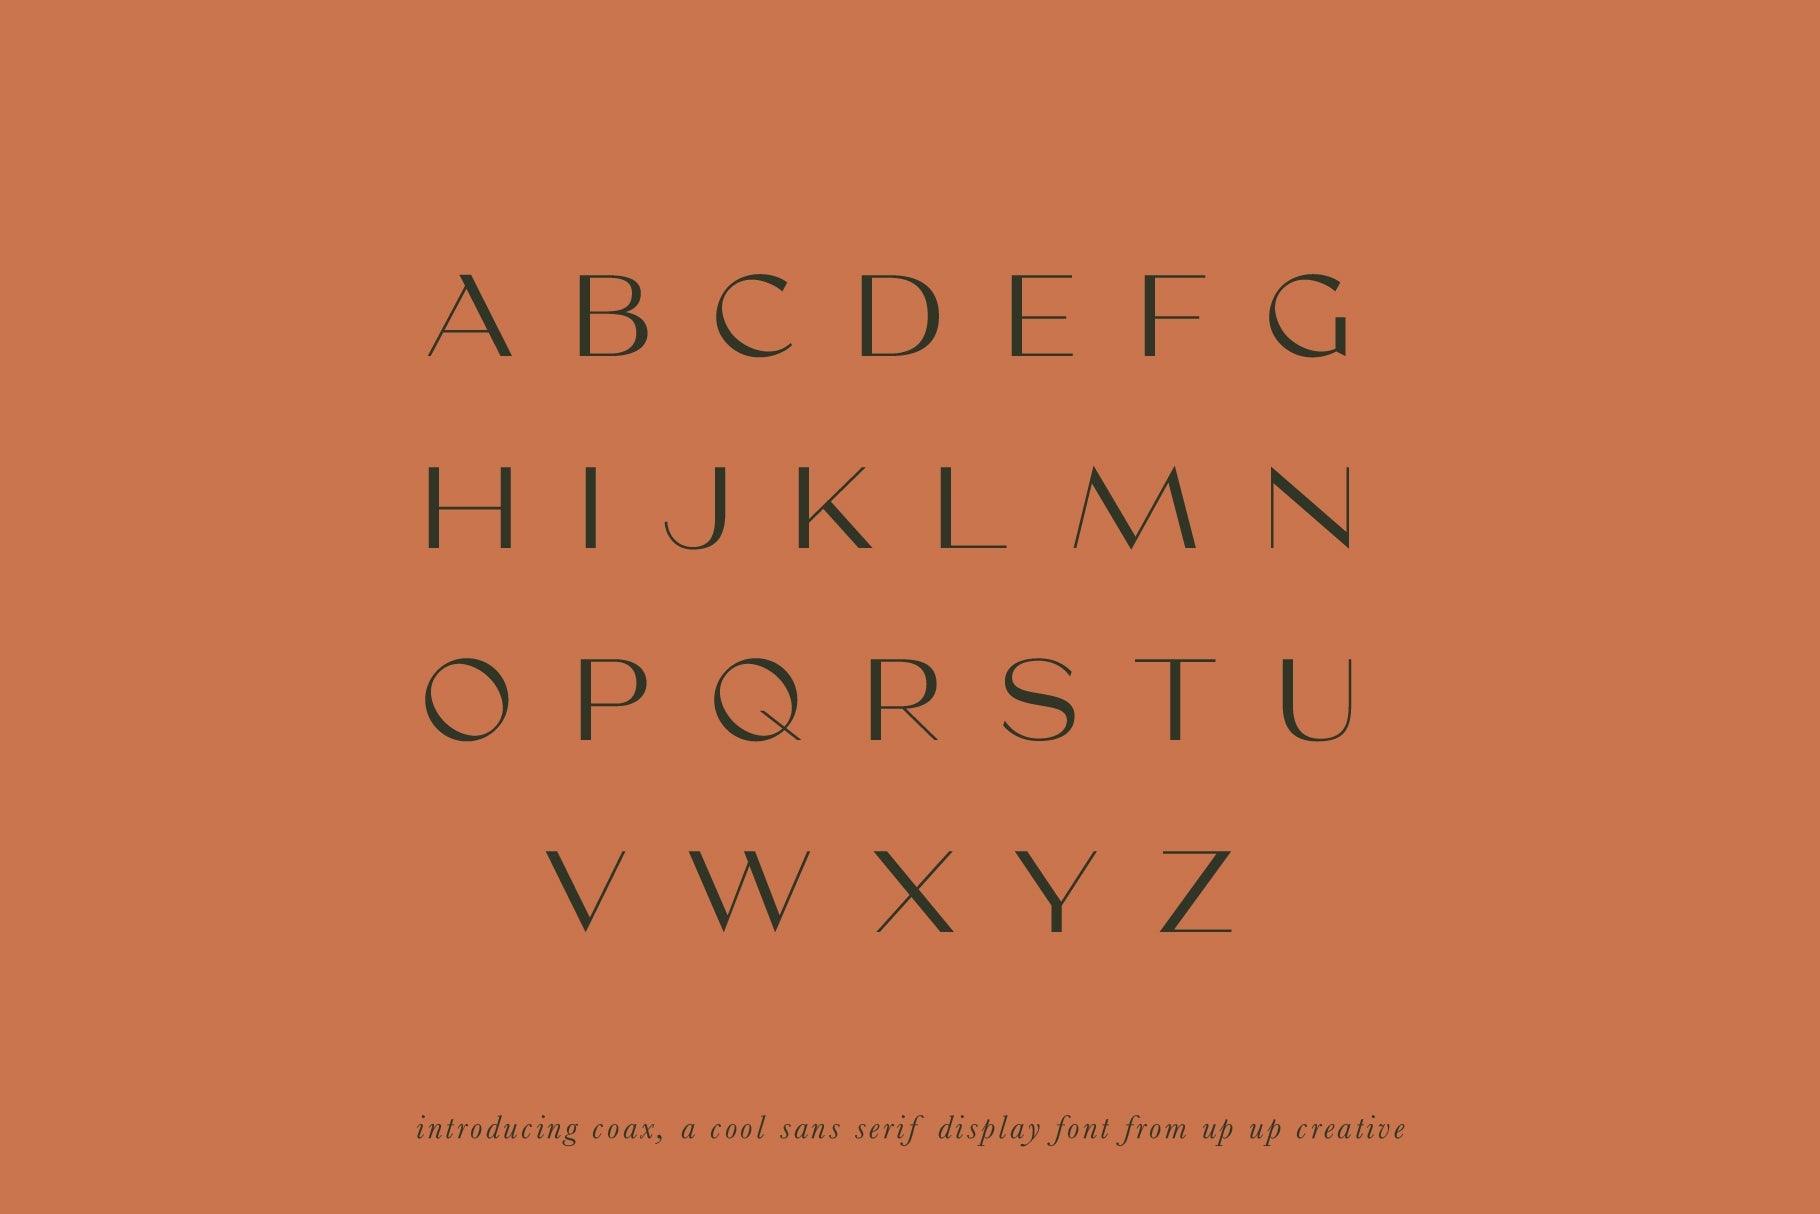 Coax Sans Serif Display Font - Up Up Creative